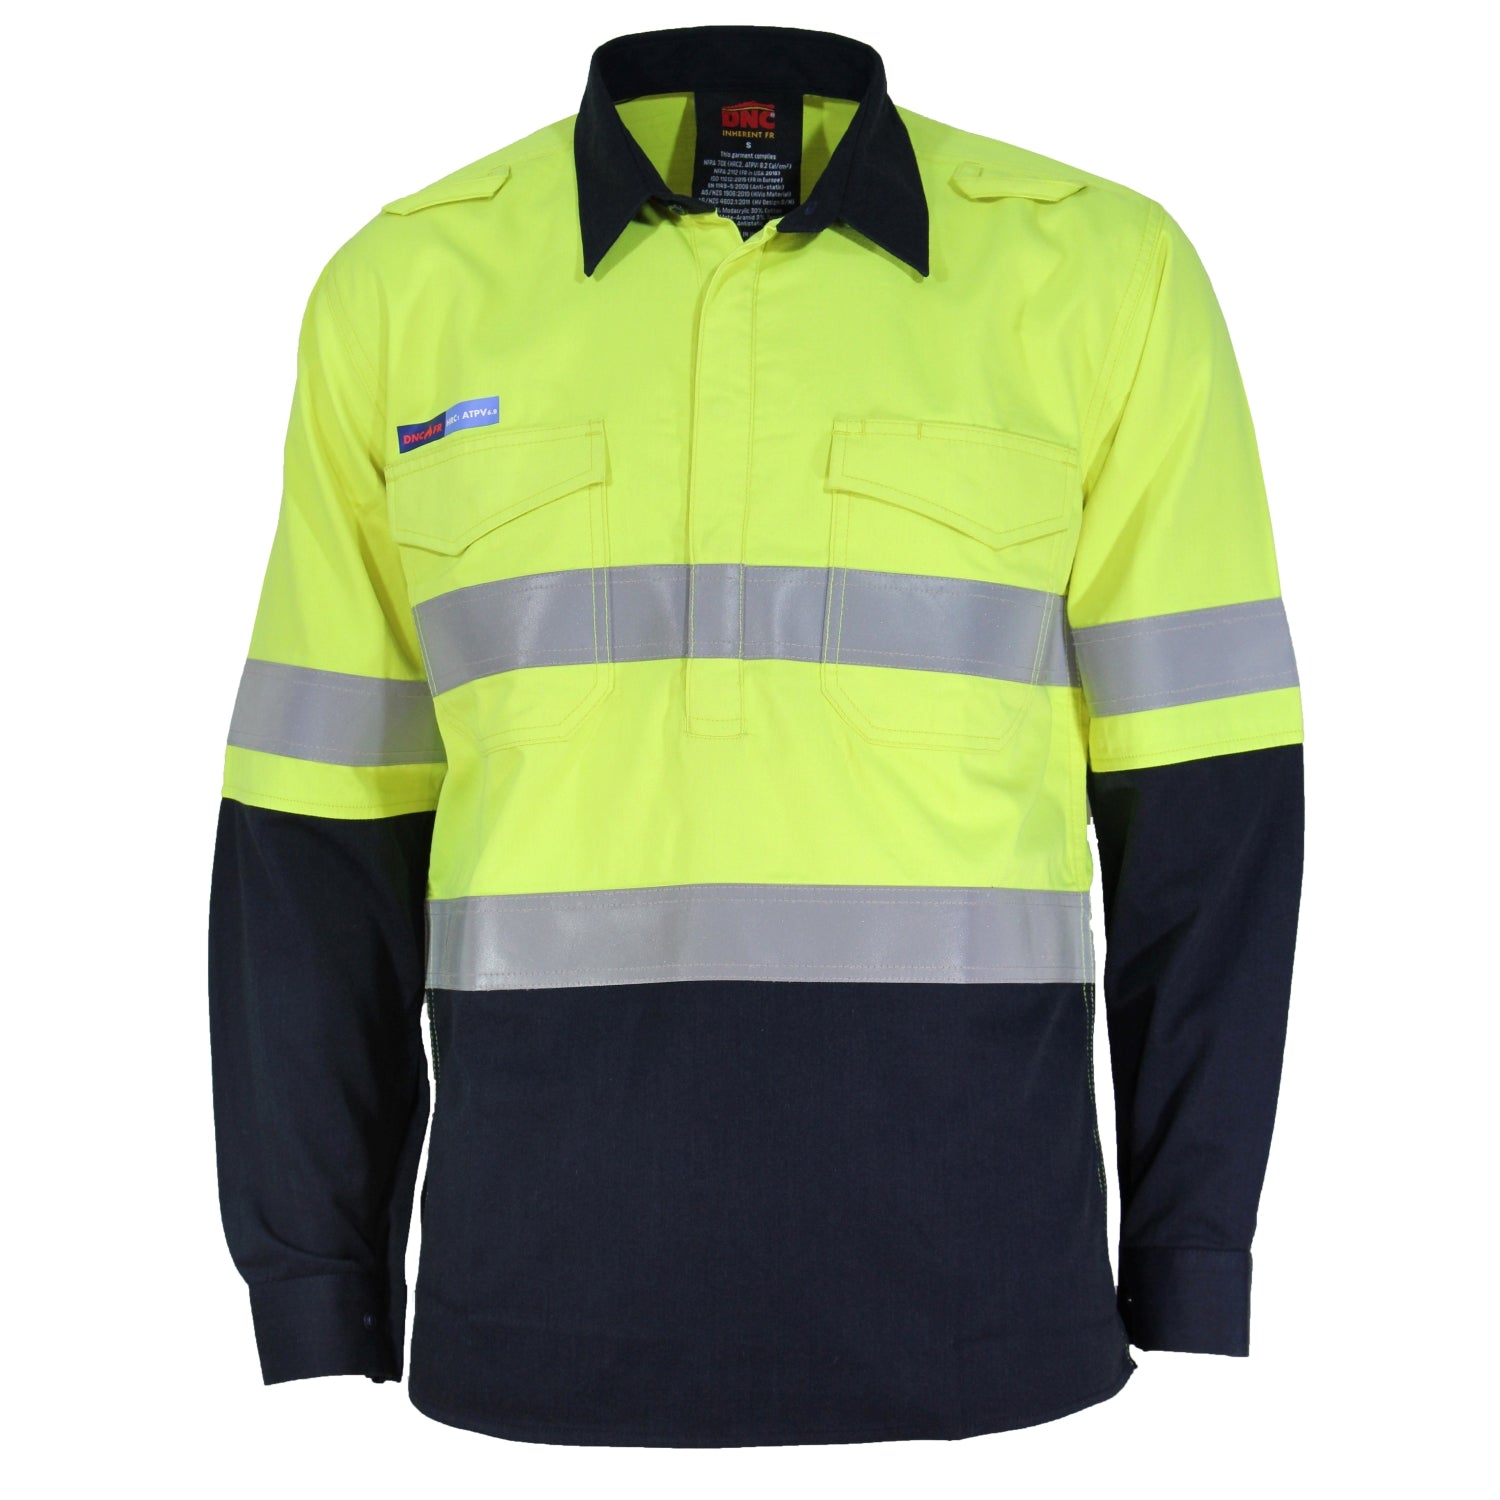 Flamearc Hrc1 C/fl/w D/n Shirt - 3447 Work Wear DNC Workwear Yellow/Navy XS 